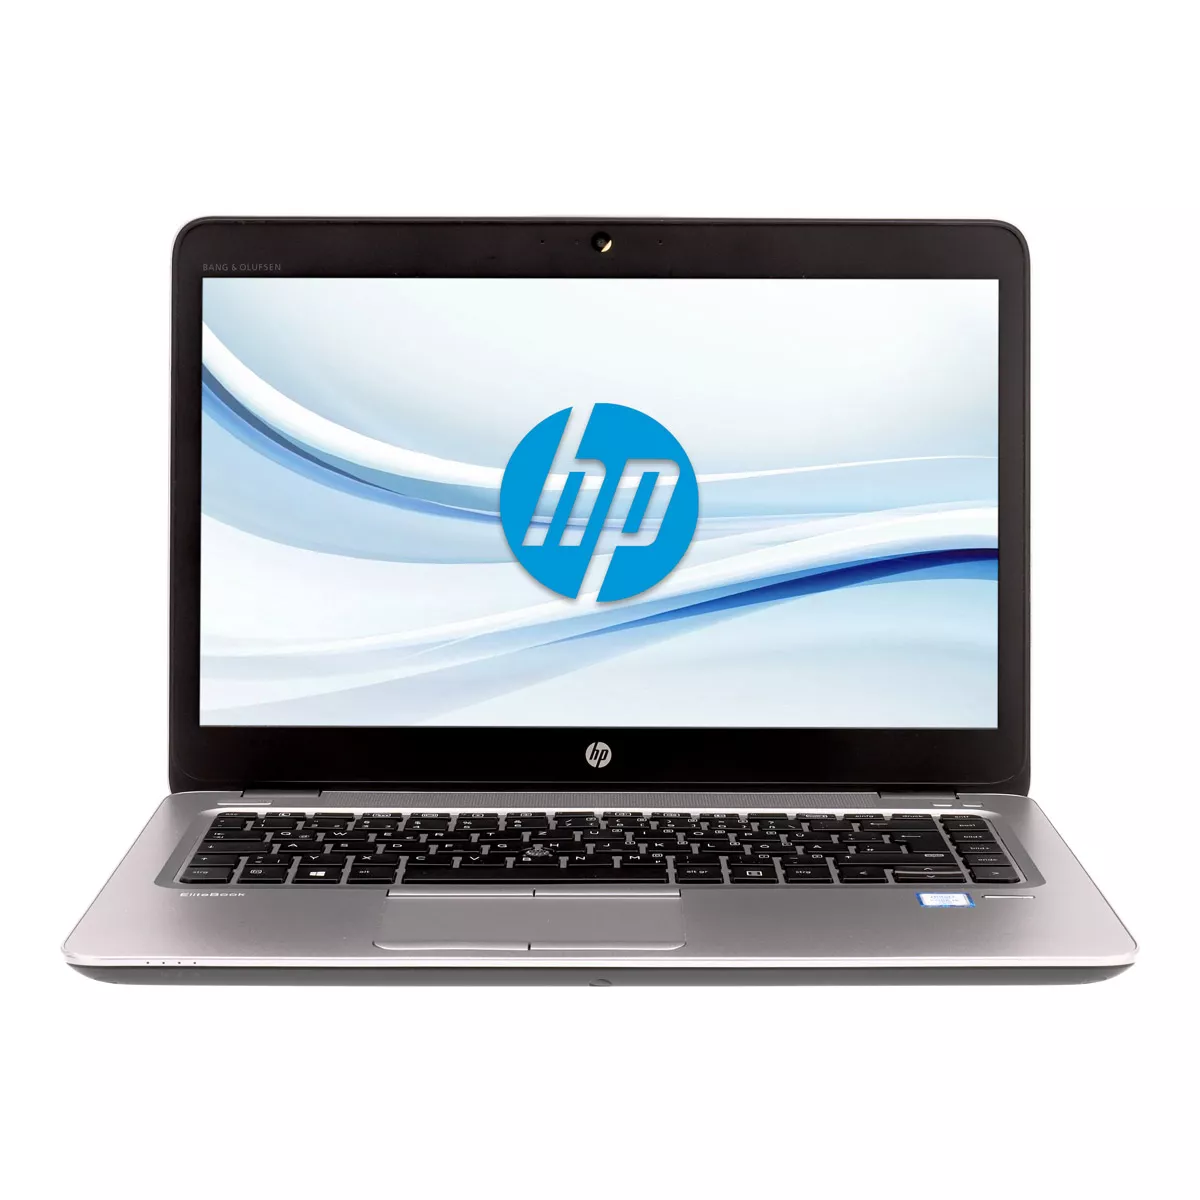 HP EliteBook 840 G3 Core i5 6300U Full-HD 240 GB M.2 SSD Touch Webcam B